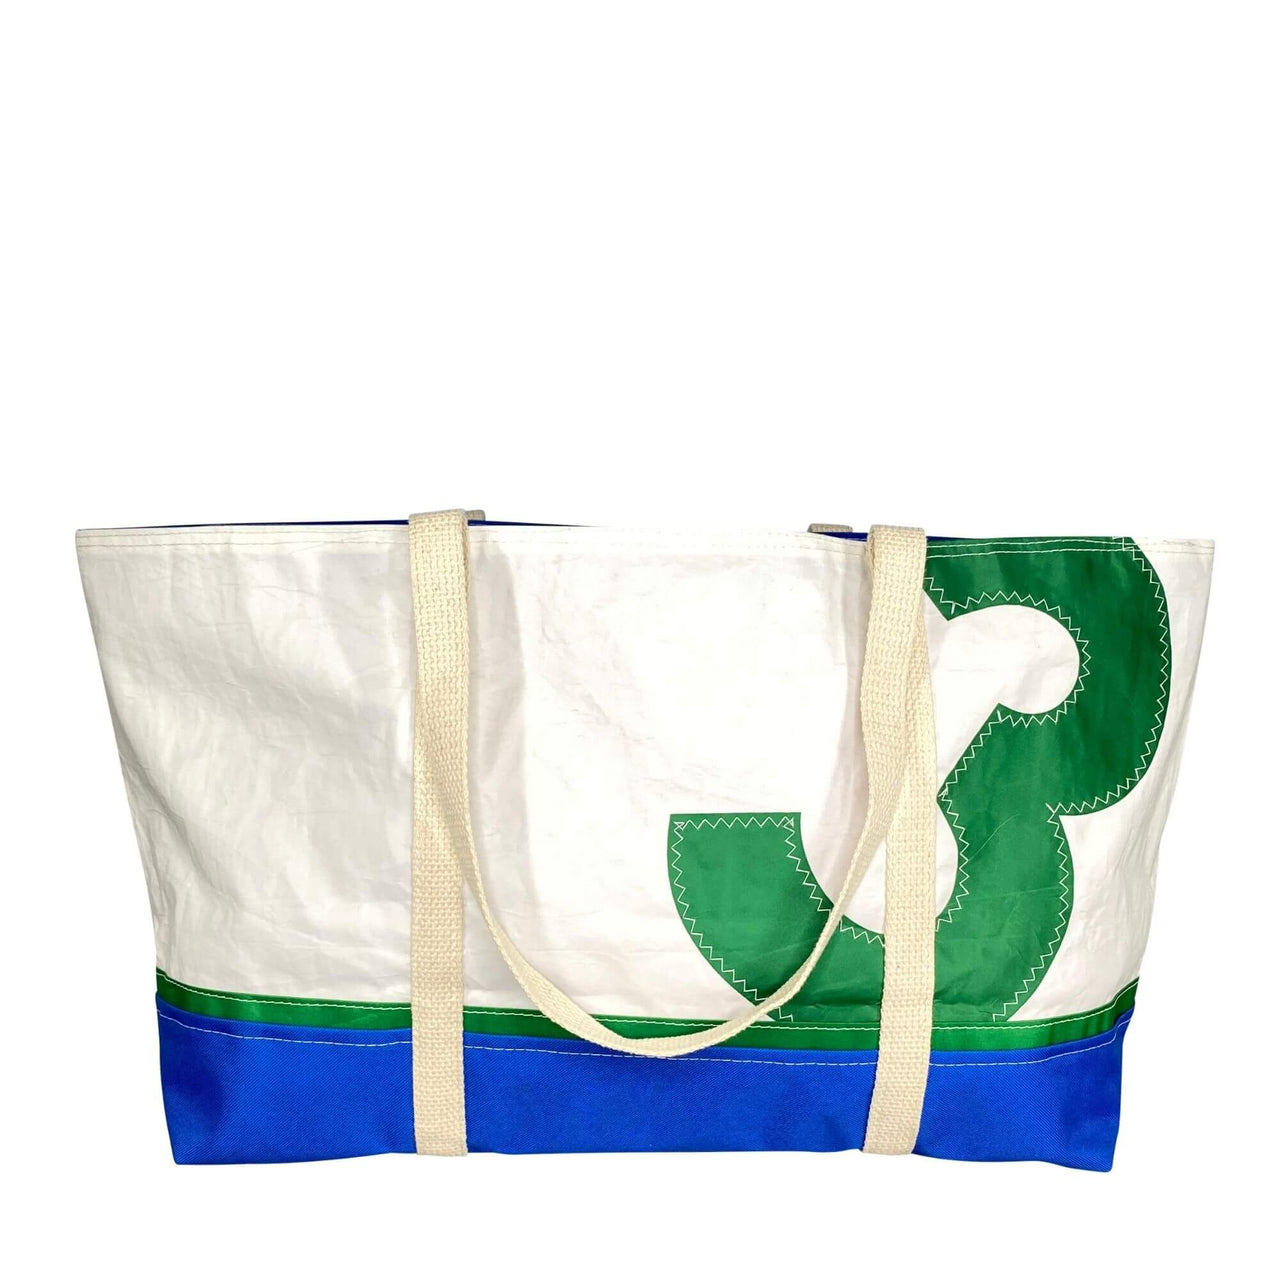 Recycled Sail Bag, Tote Bag Handmade from Sails, Blue & Green Handbags New England Trading Co   